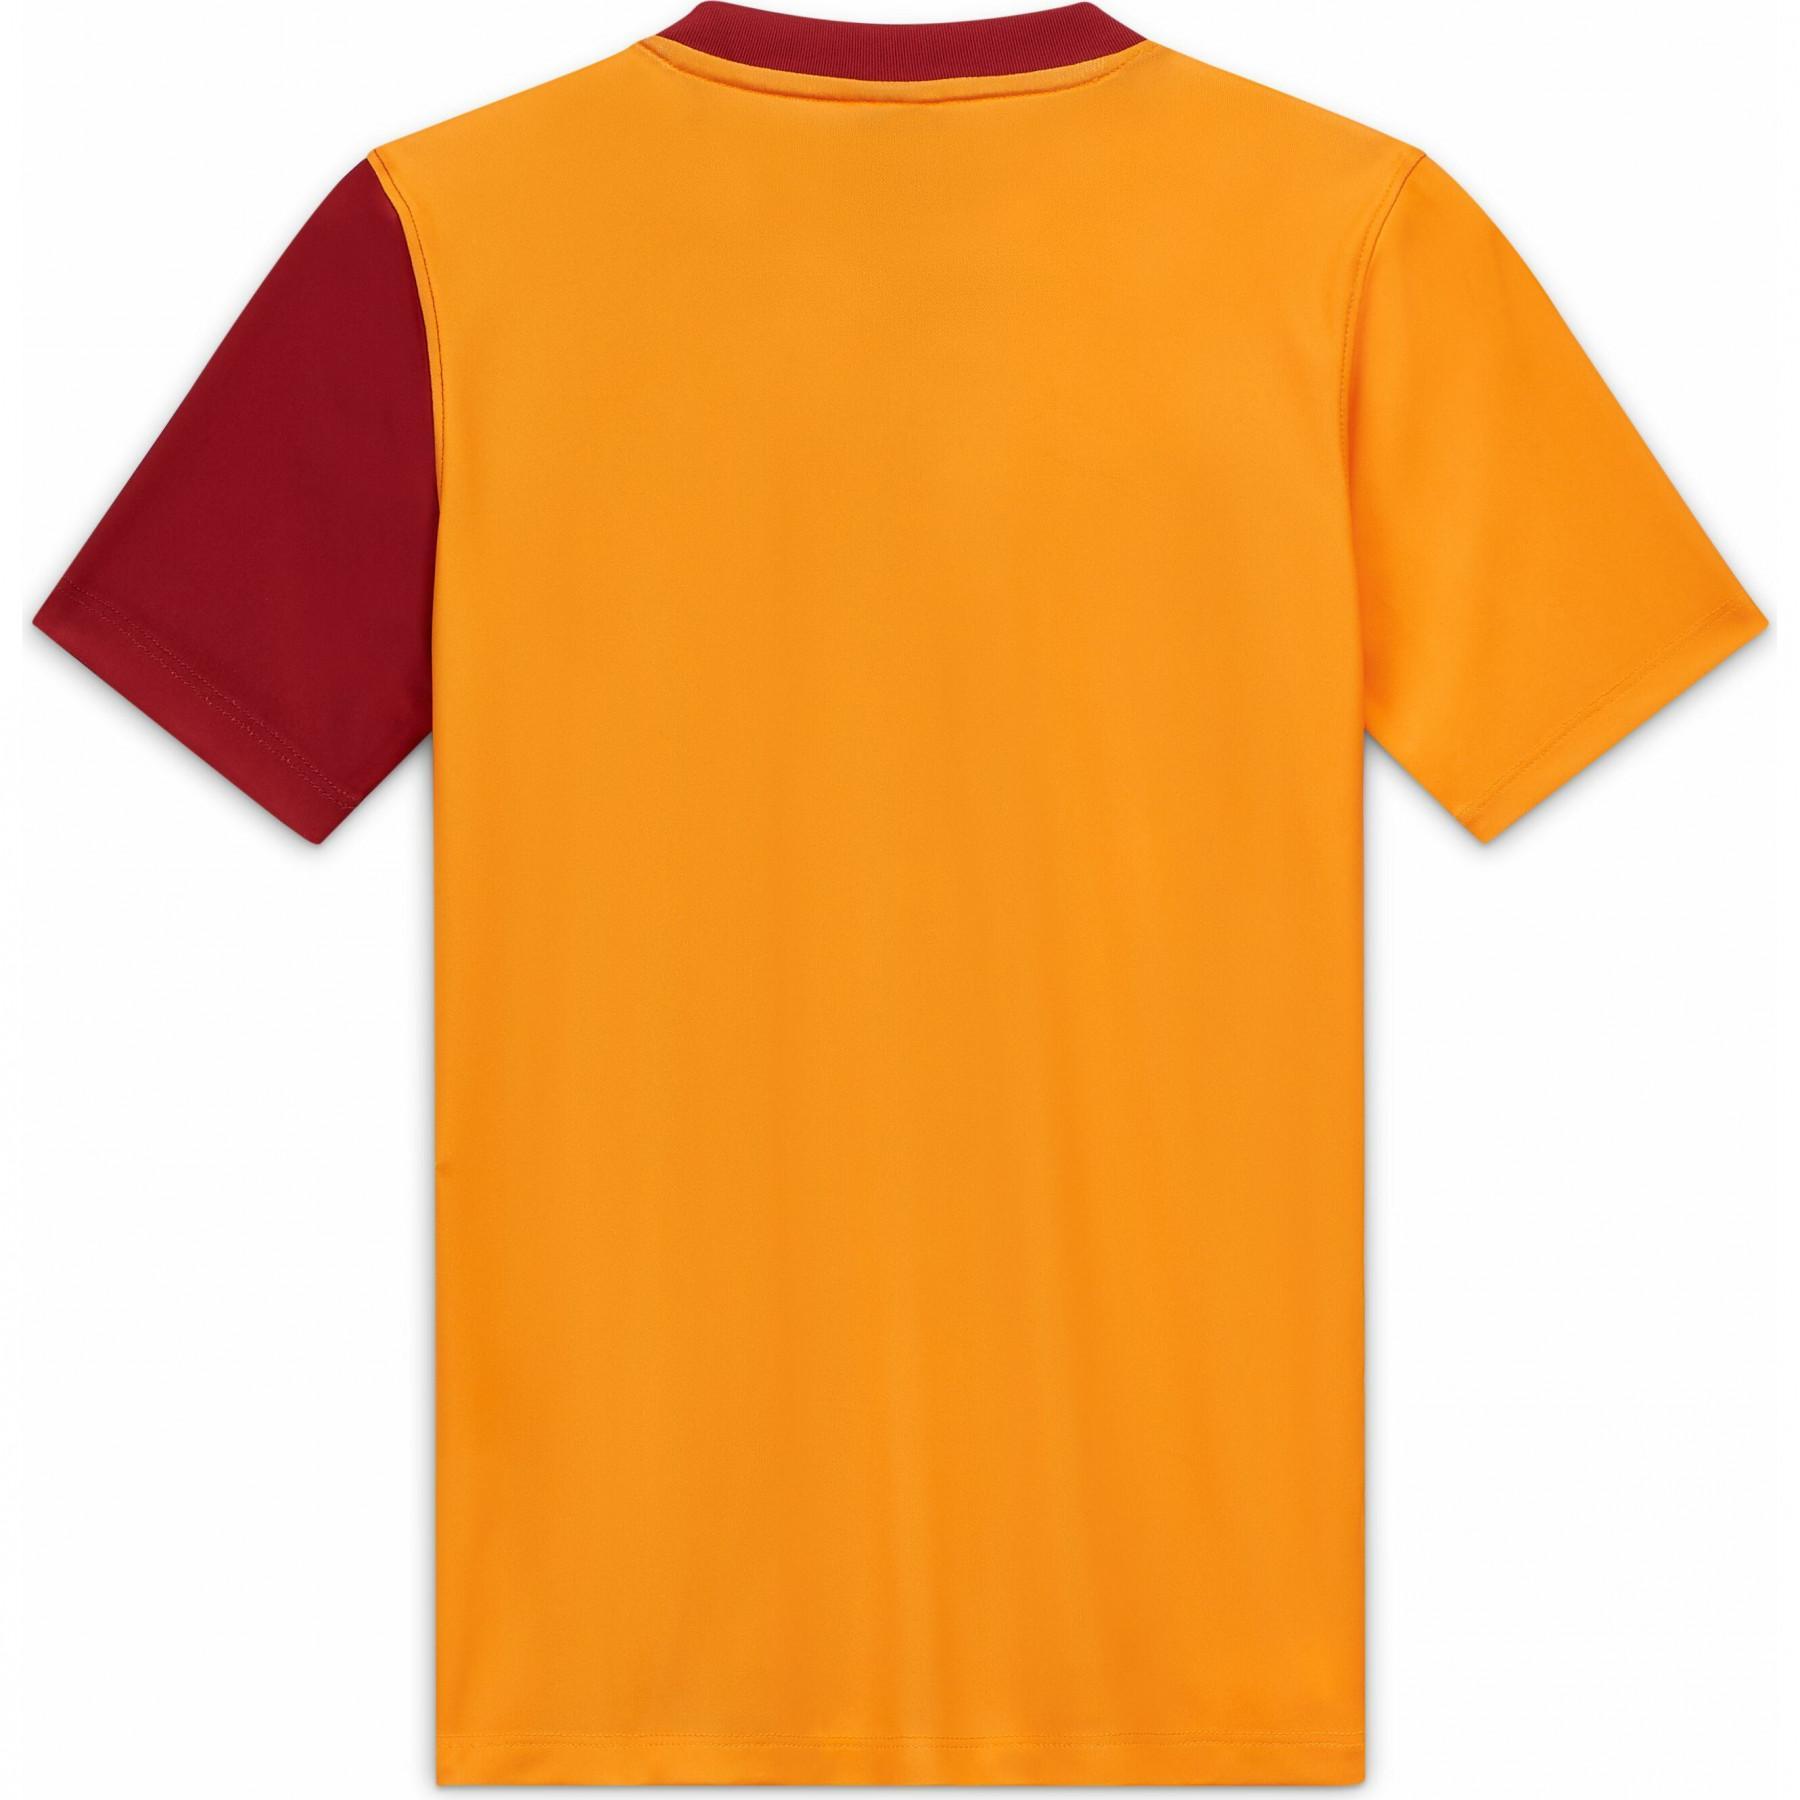 Koszulka dziecięca Galatasaray 2020/21